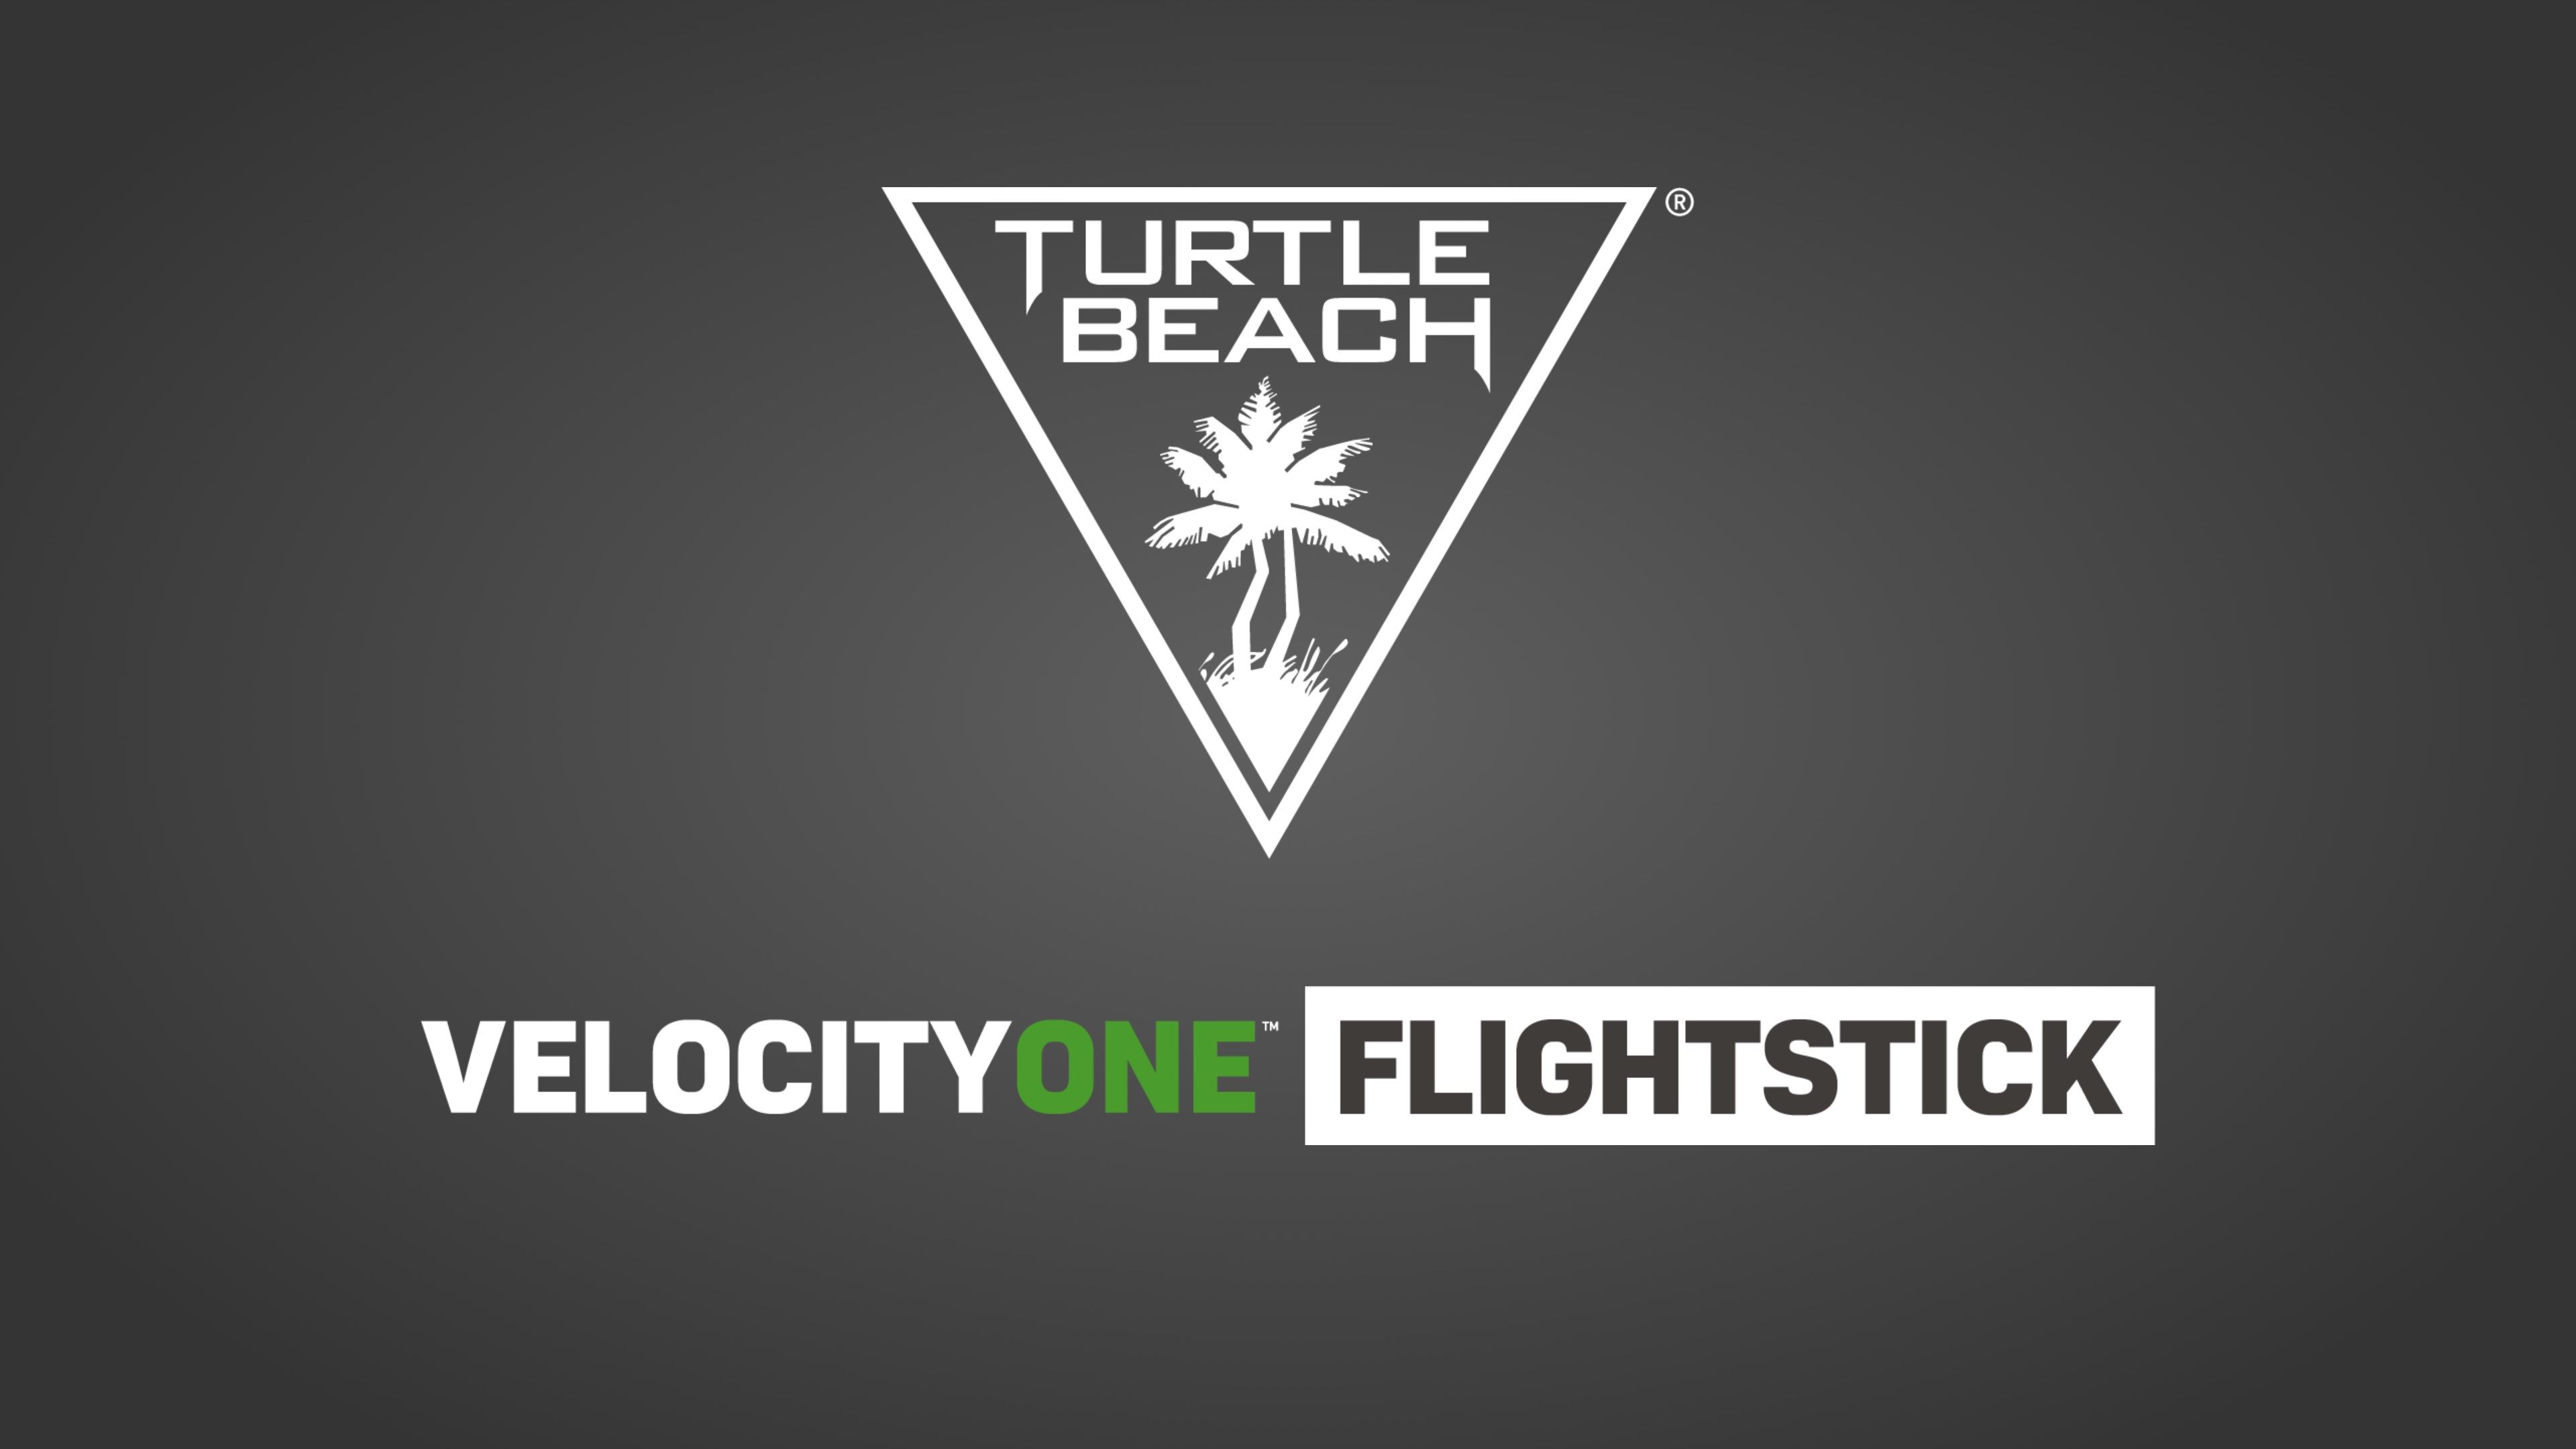 Turtle Beach VelocityOne Flightstick